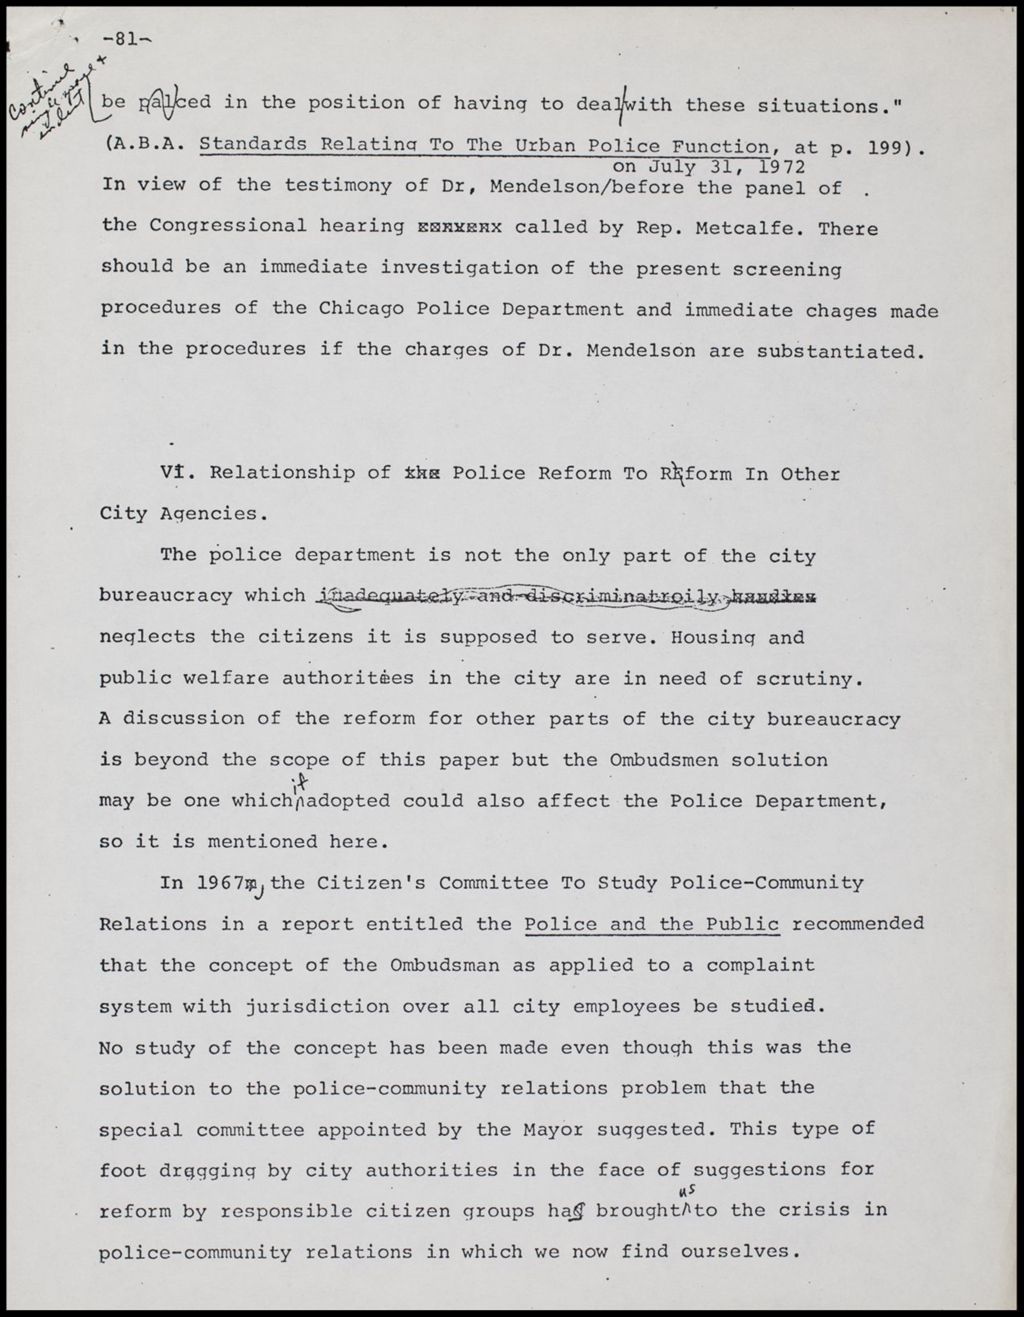 Miniature of Concerned Citizens for Police Reform, 1972 (Folder II-2157)